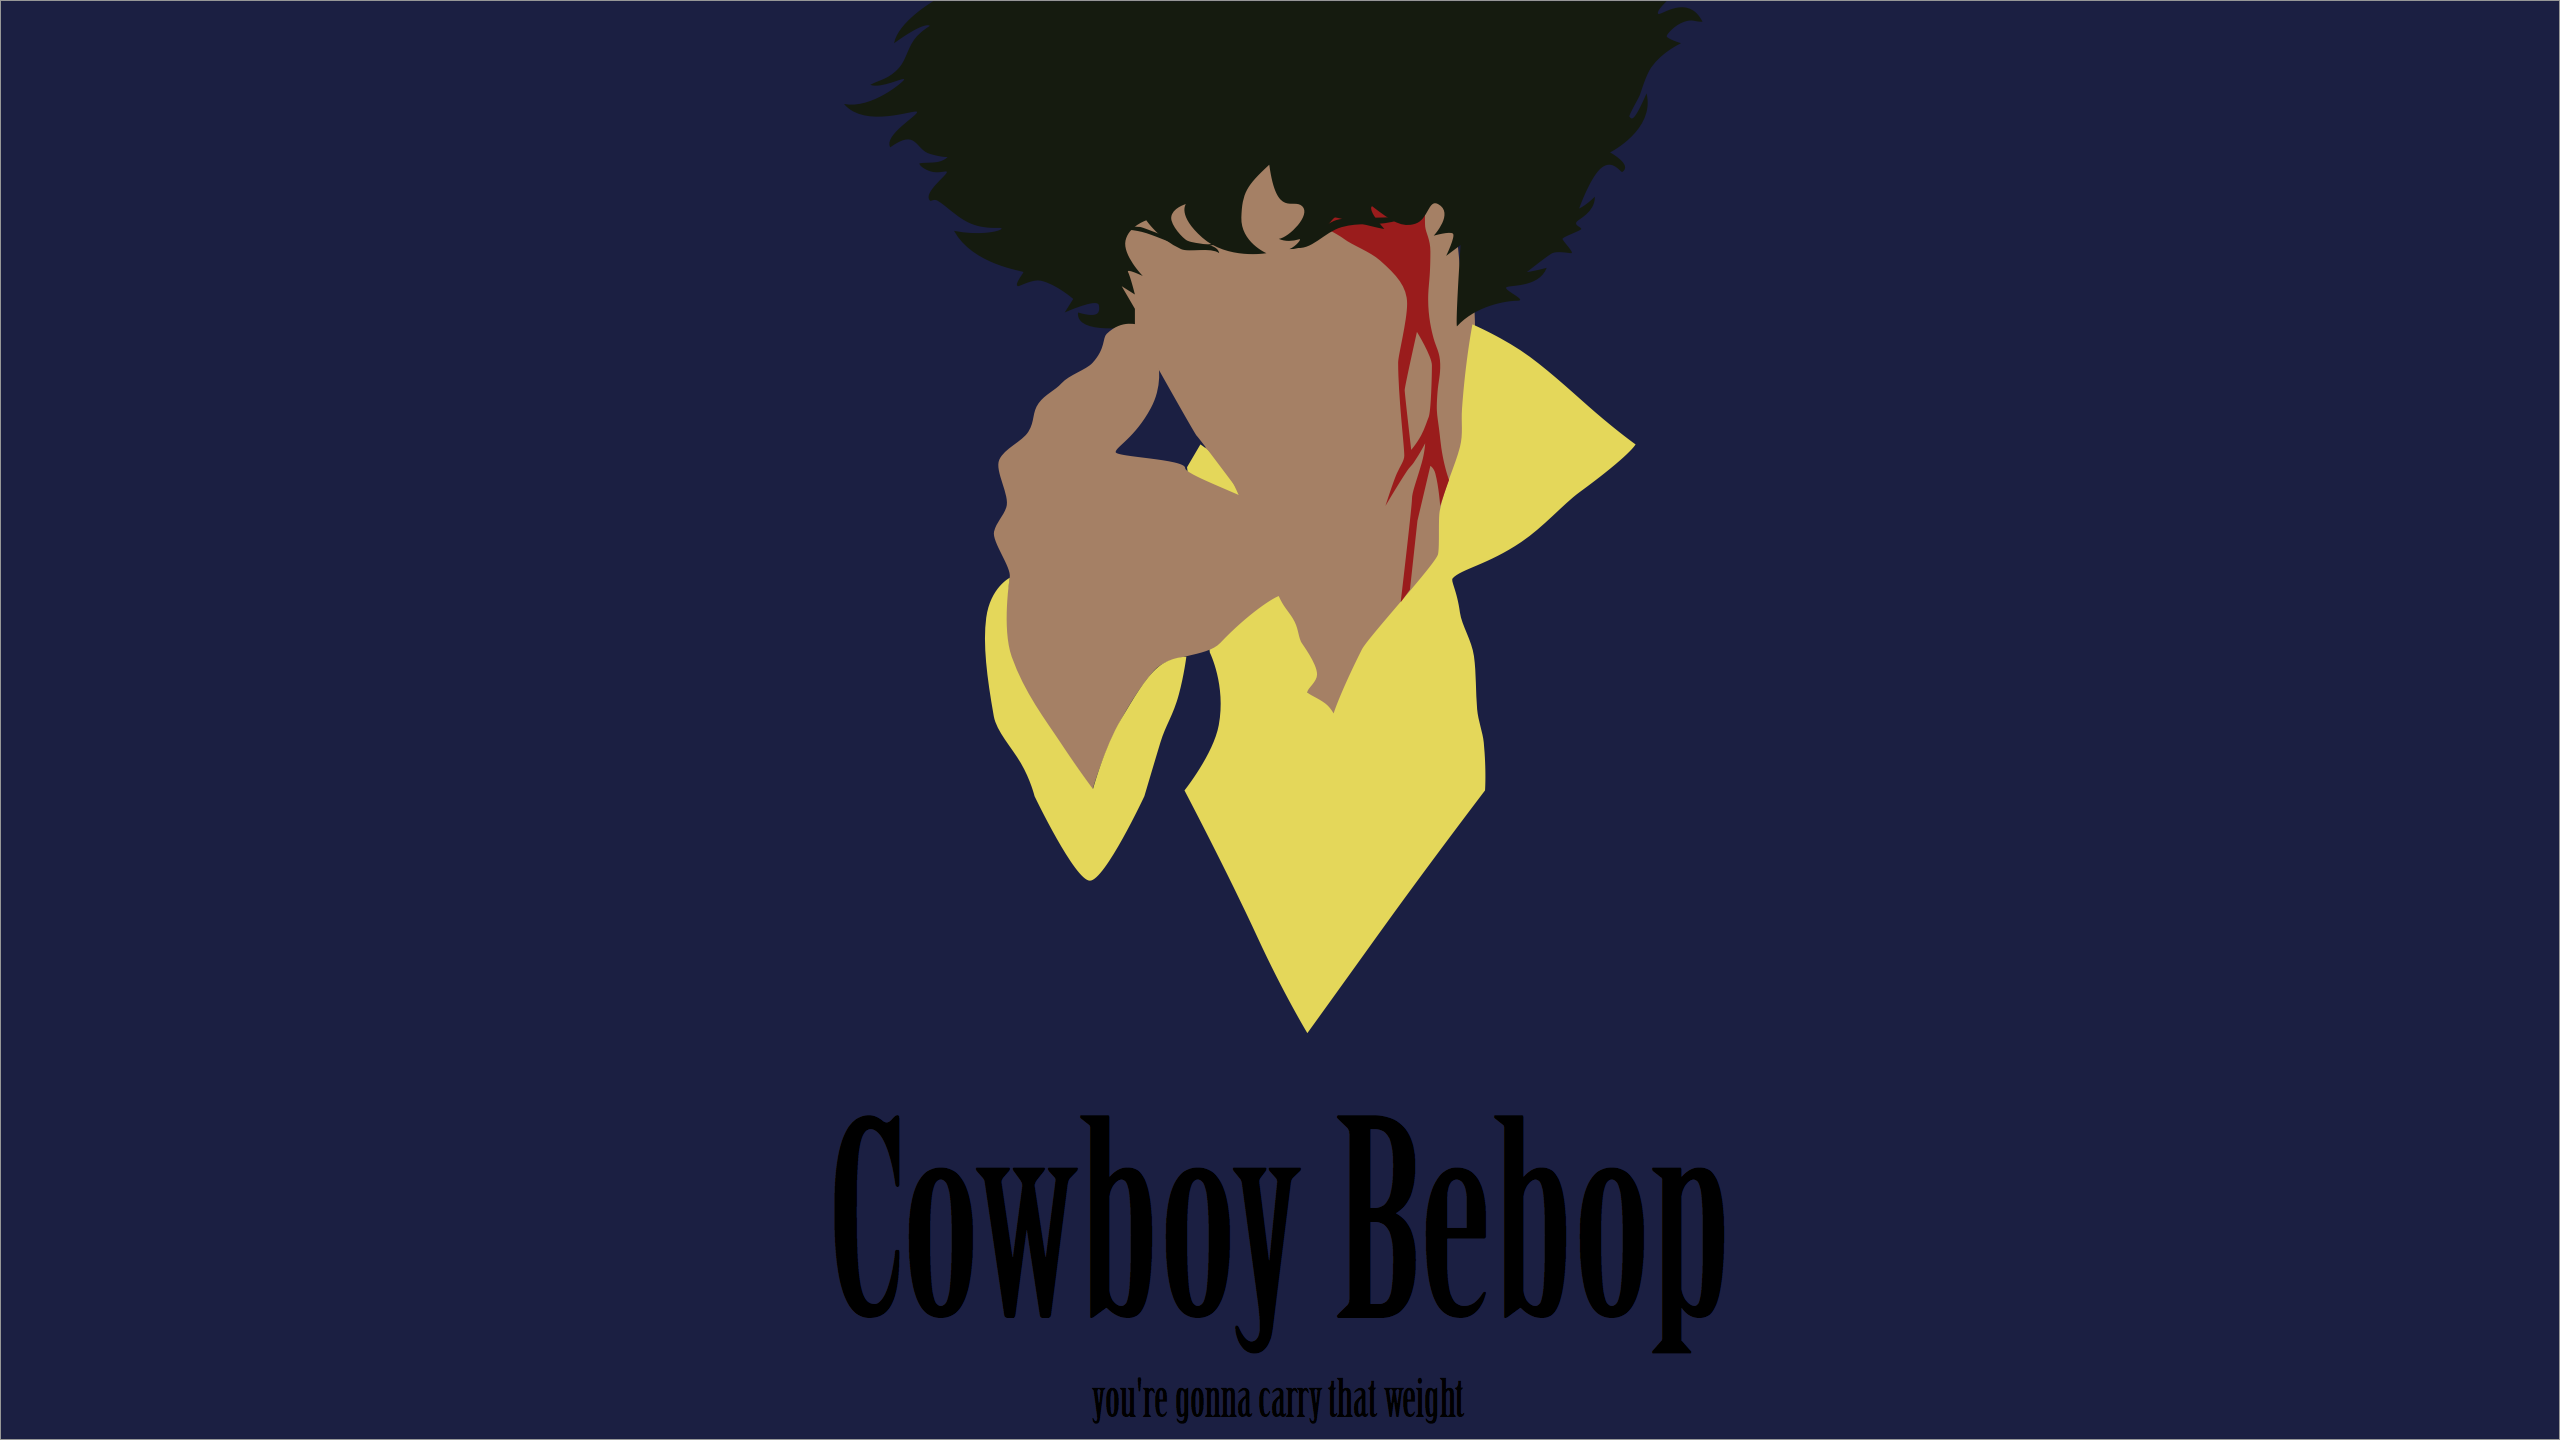 Minimalist Cowboy Bebop Wallpaper by Porjin on